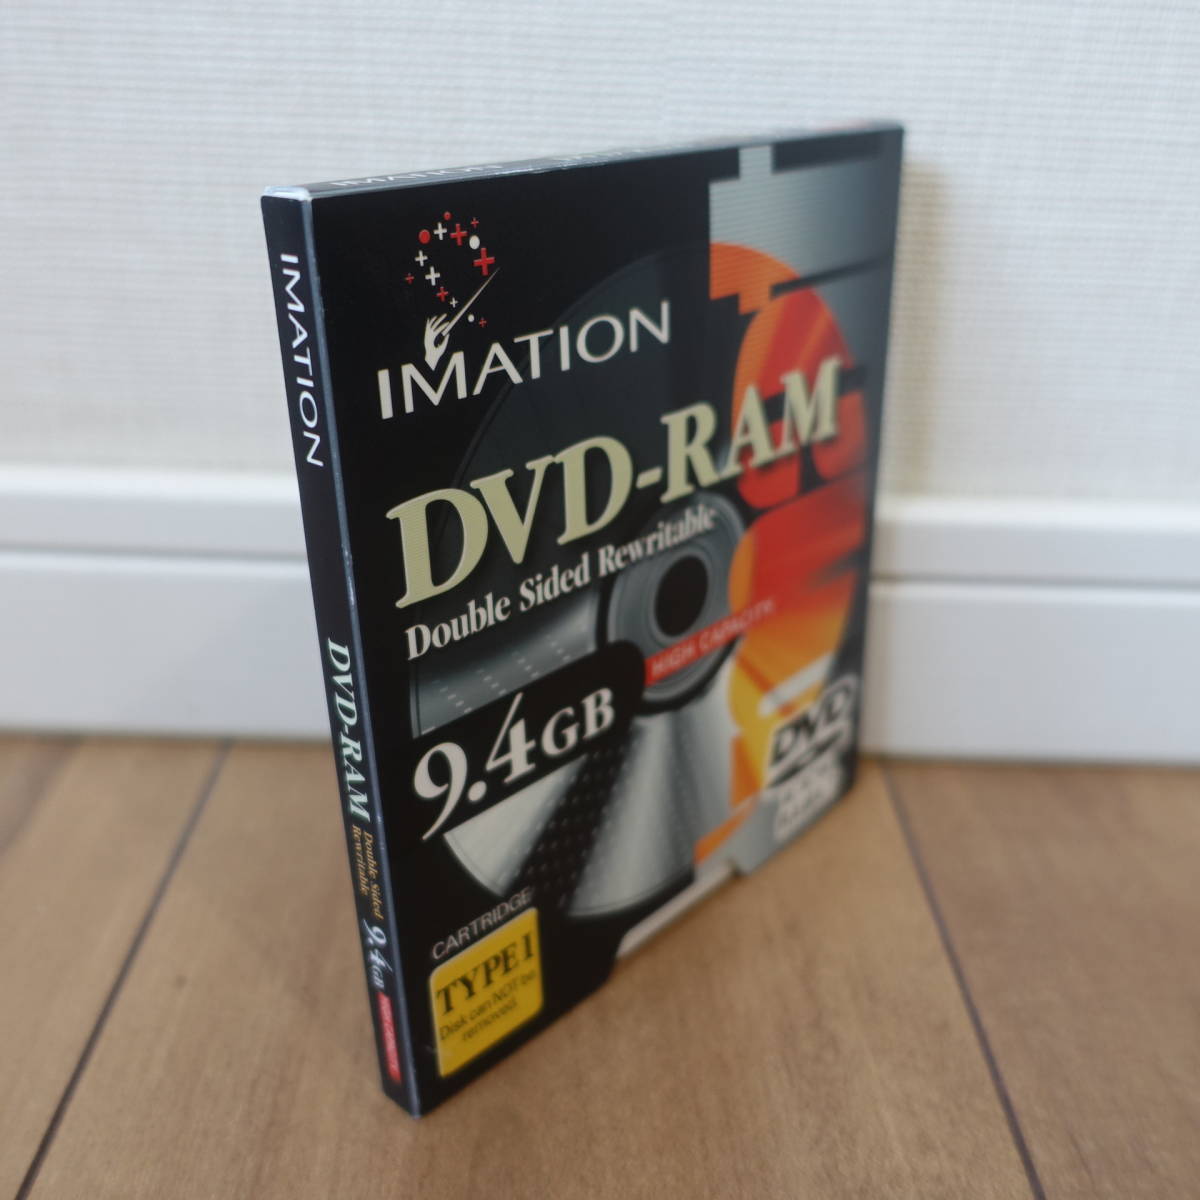 DVD-RAM IMATION 9.4GB Double Sided Rewritable TYPE 1 cartridge type 